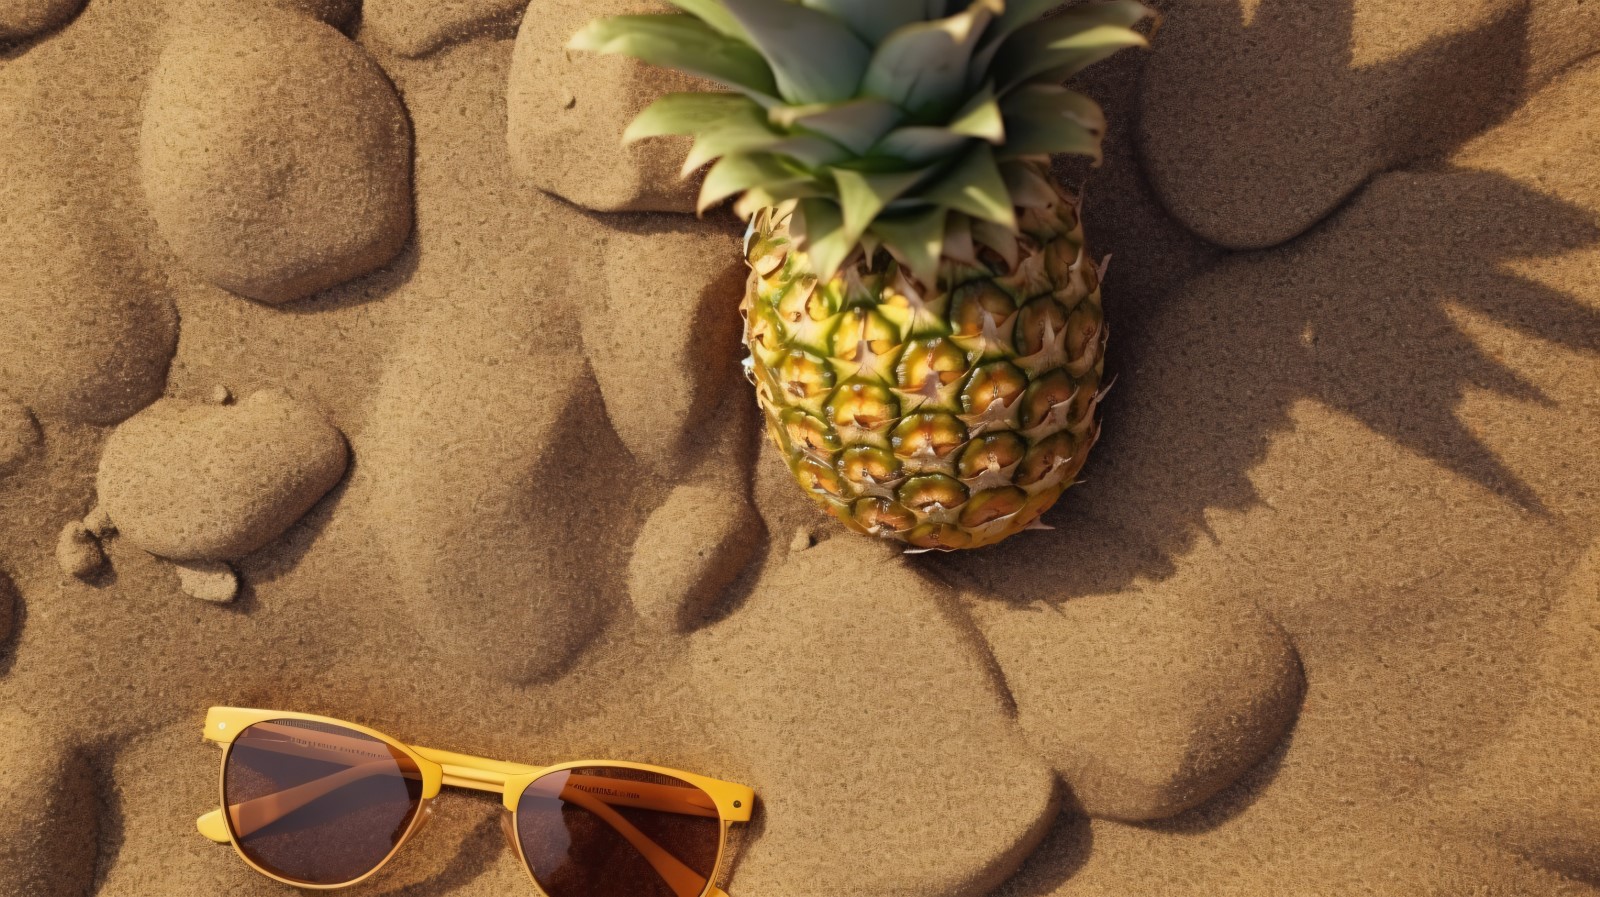 Halved pineapple and a sunglass kept on the sand 180